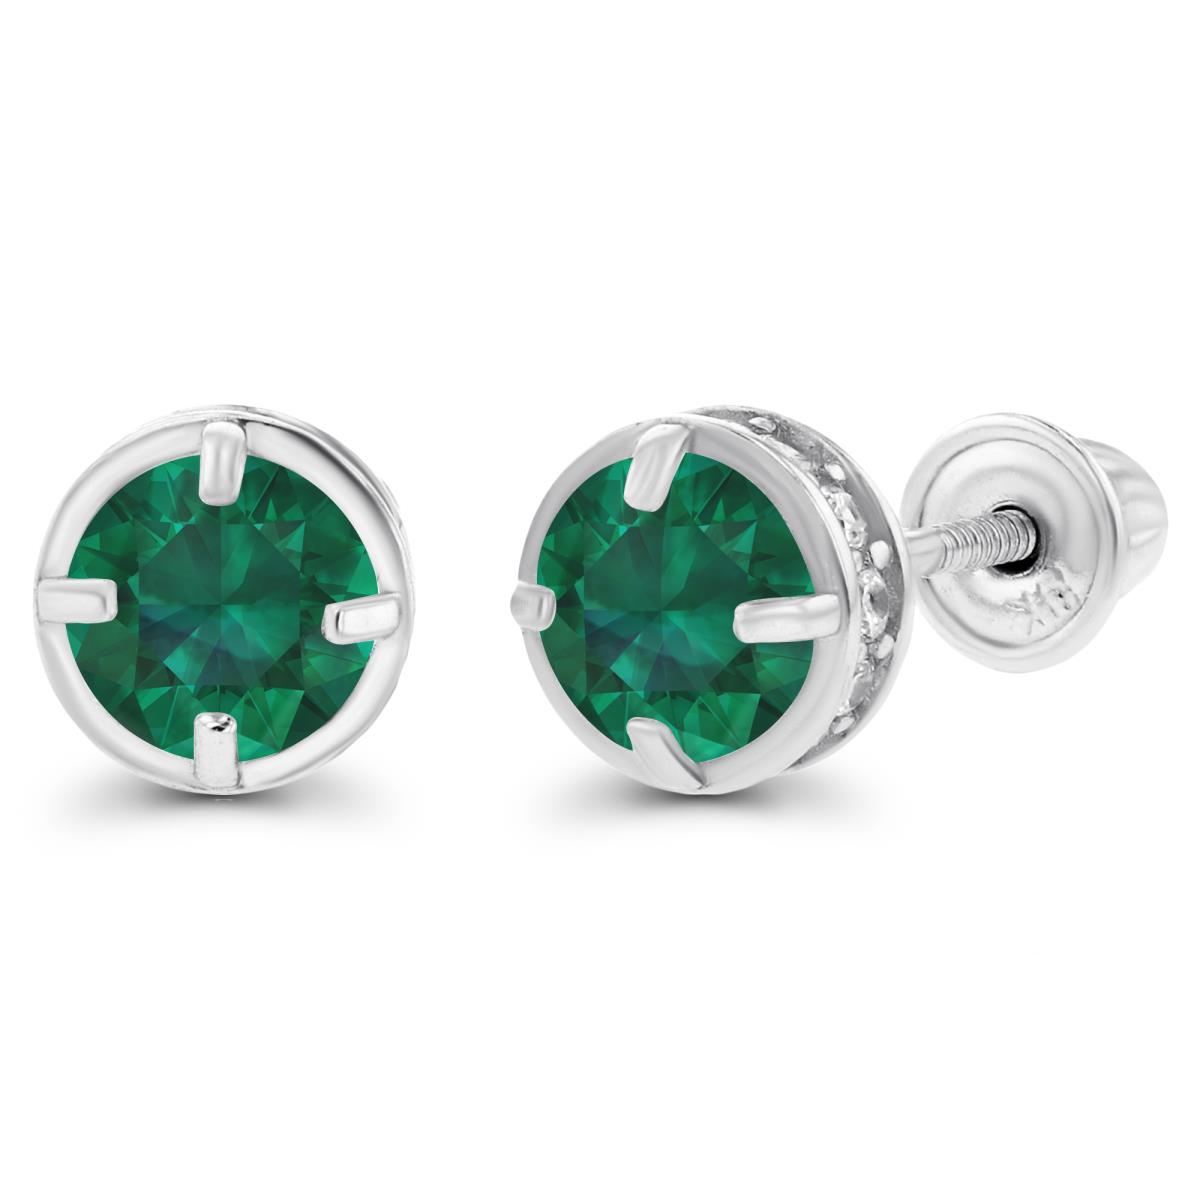 14K White Gold 4mm Created Emerald & 1mm Created White Sapphire Basket Screwback Earrings